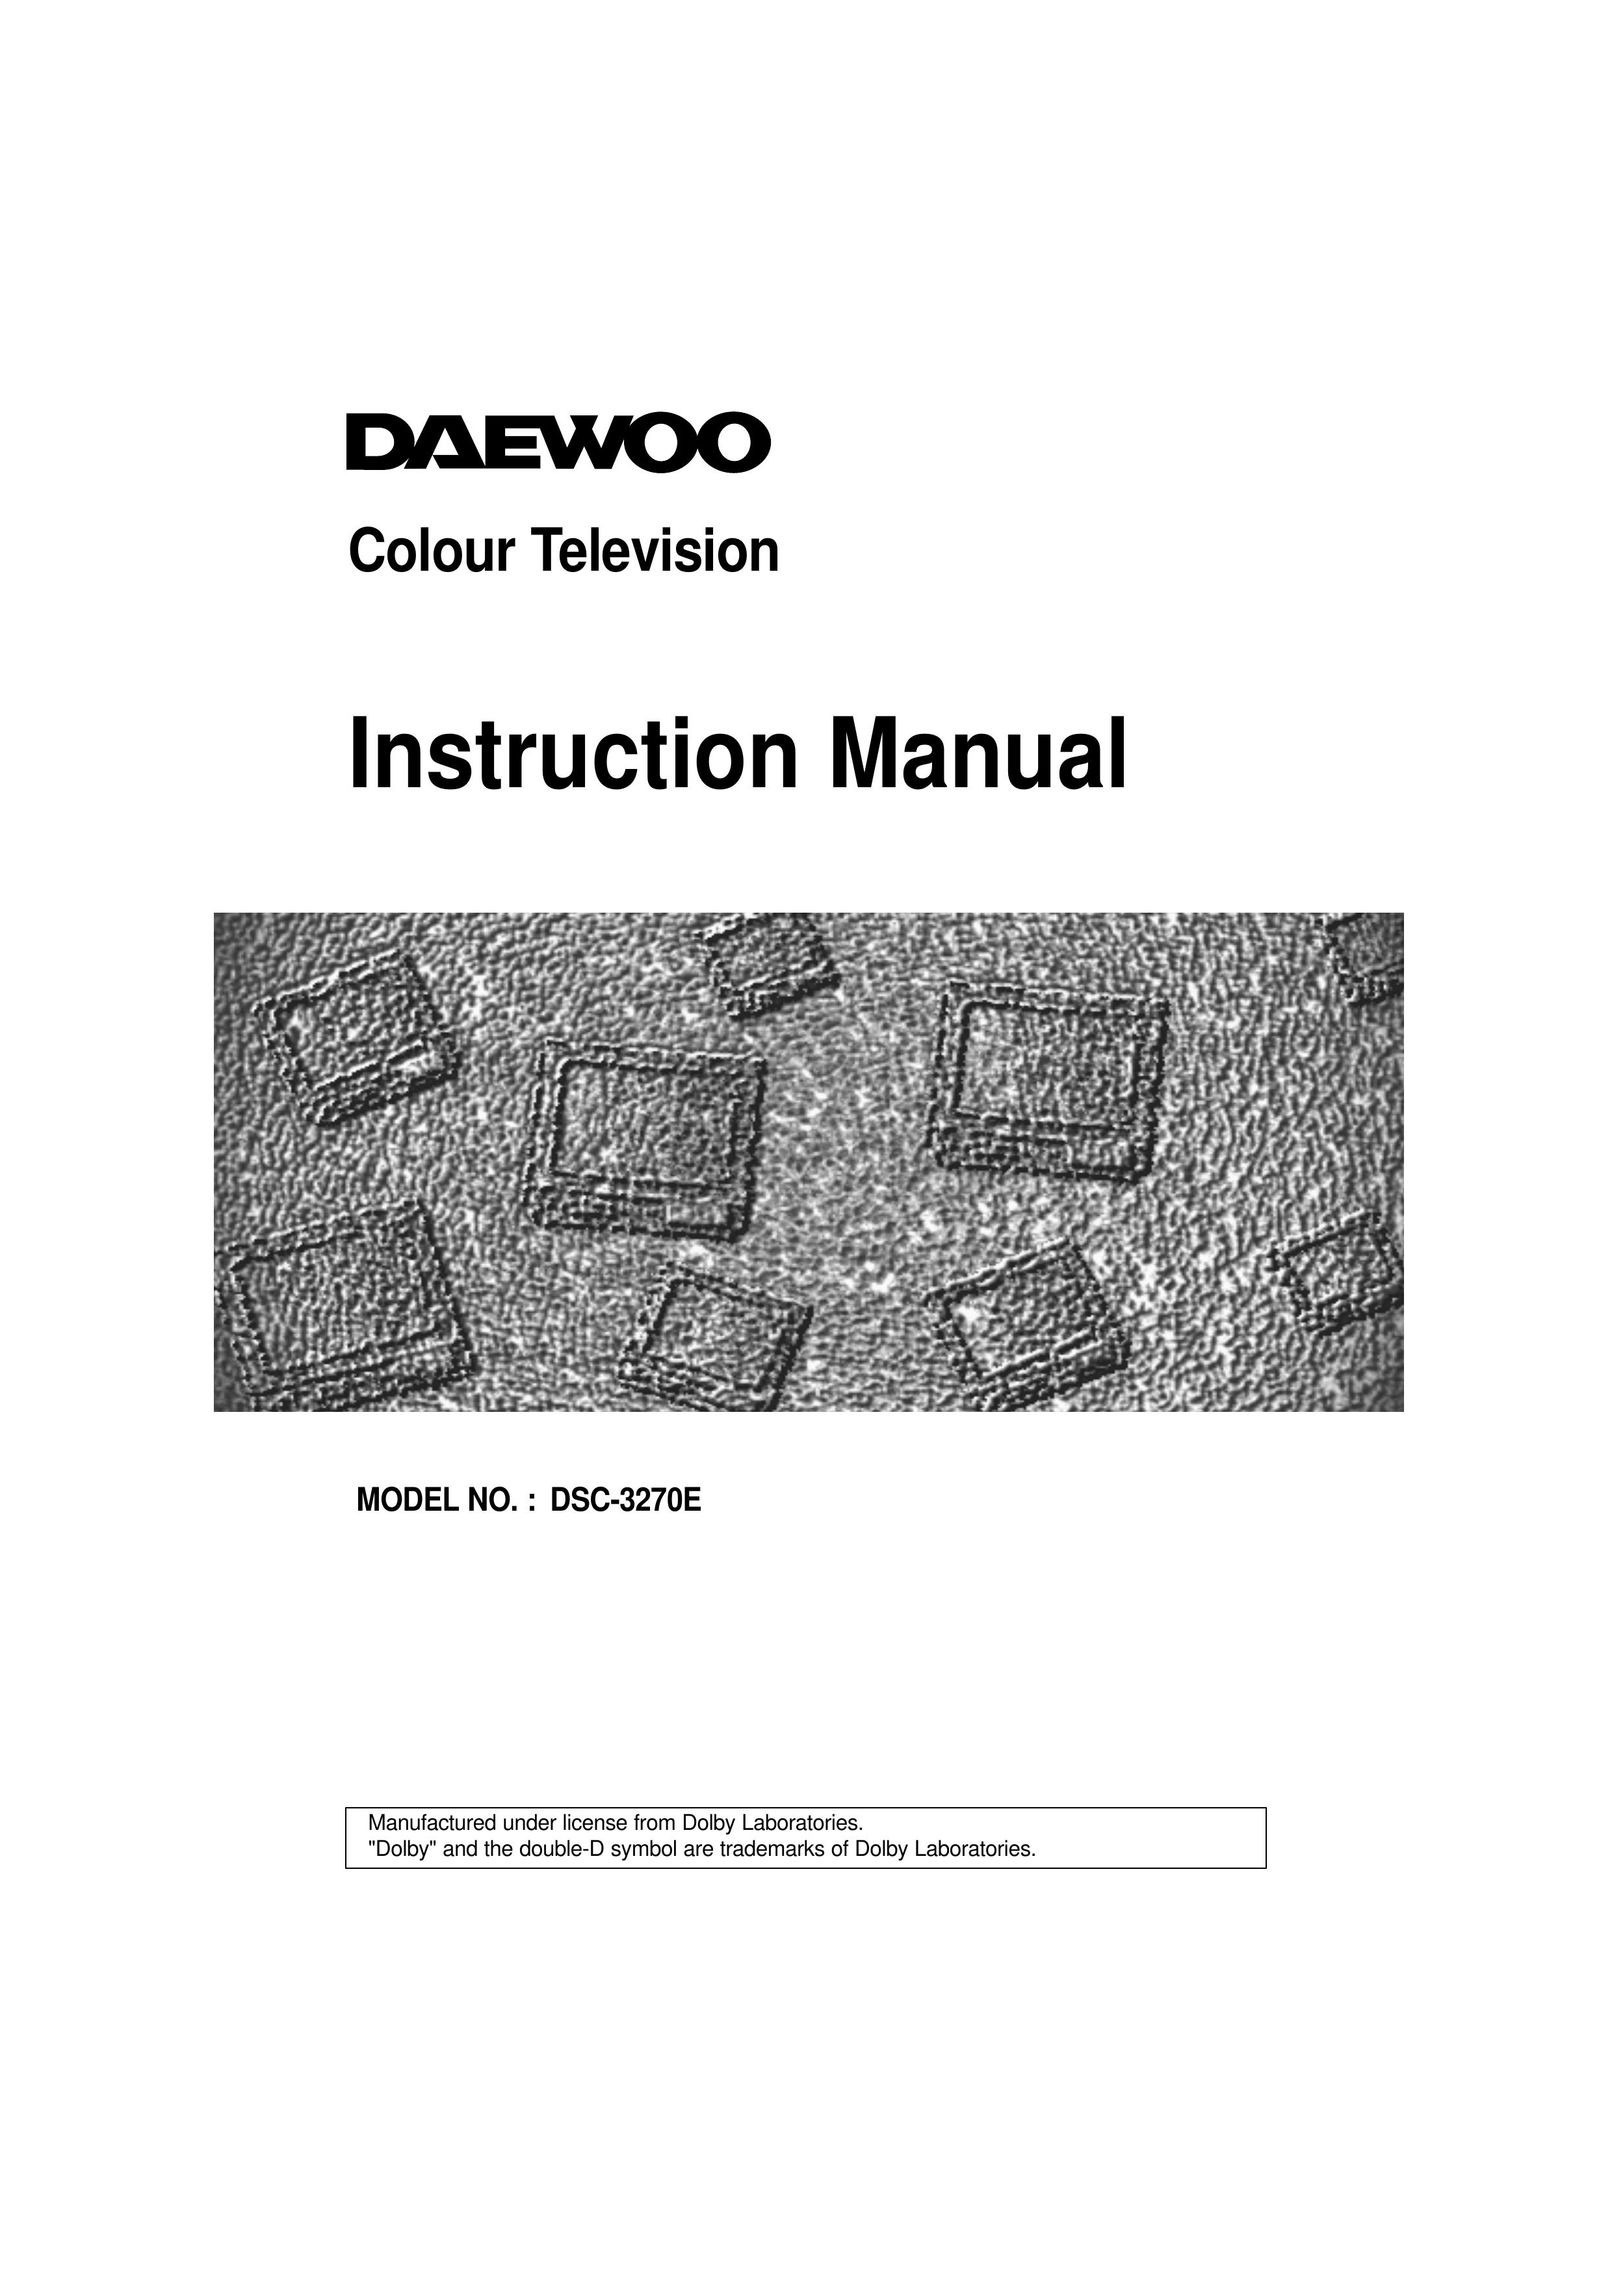 Daewoo DSC-3270E CRT Television User Manual